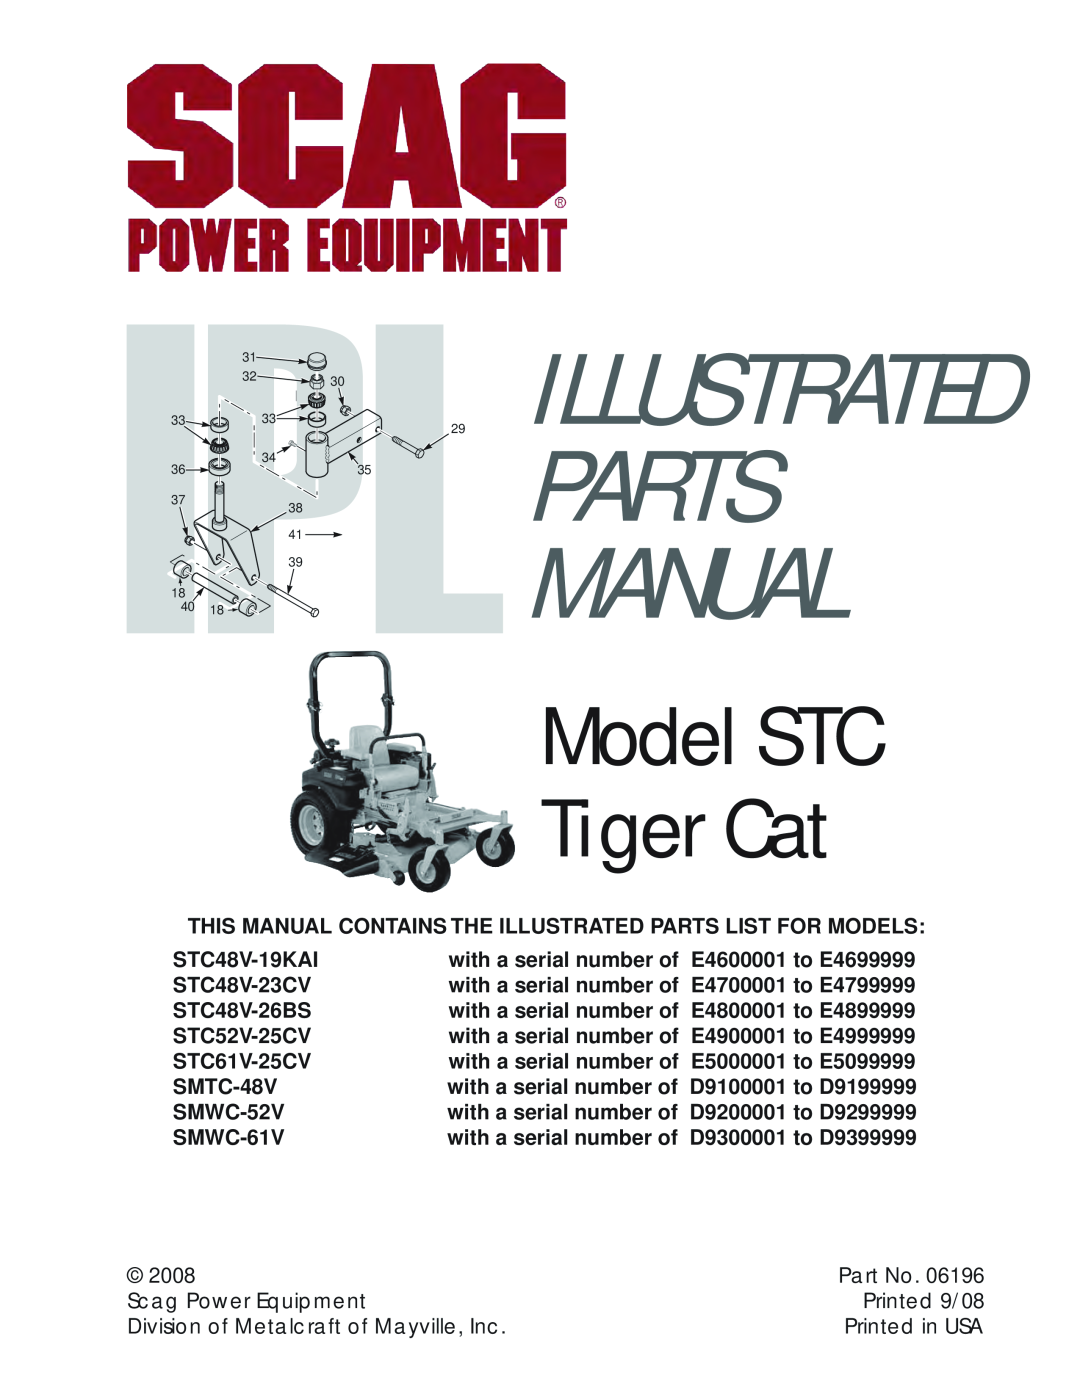 Scag Power Equipment STC48V-19KAI manual SMTC-48V with a serial number of D9100001 to D9199999, I Pl, Model Stc, September 